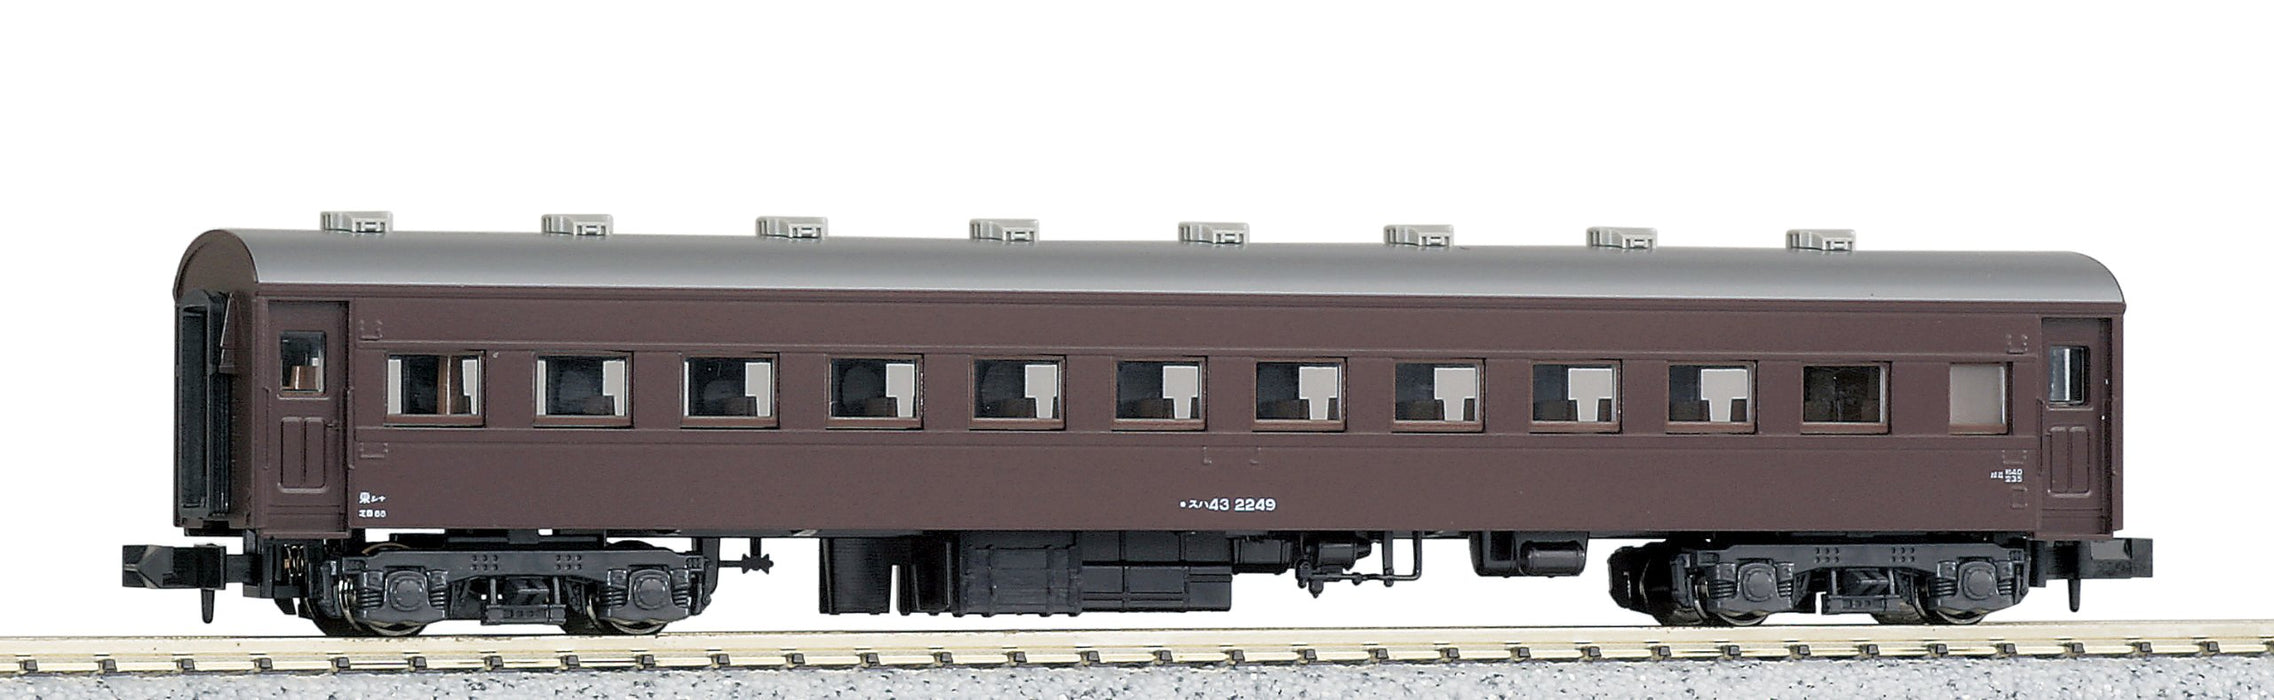 Kato Brown Suha43 N Gauge 5133-1 Model Railway Passenger Car